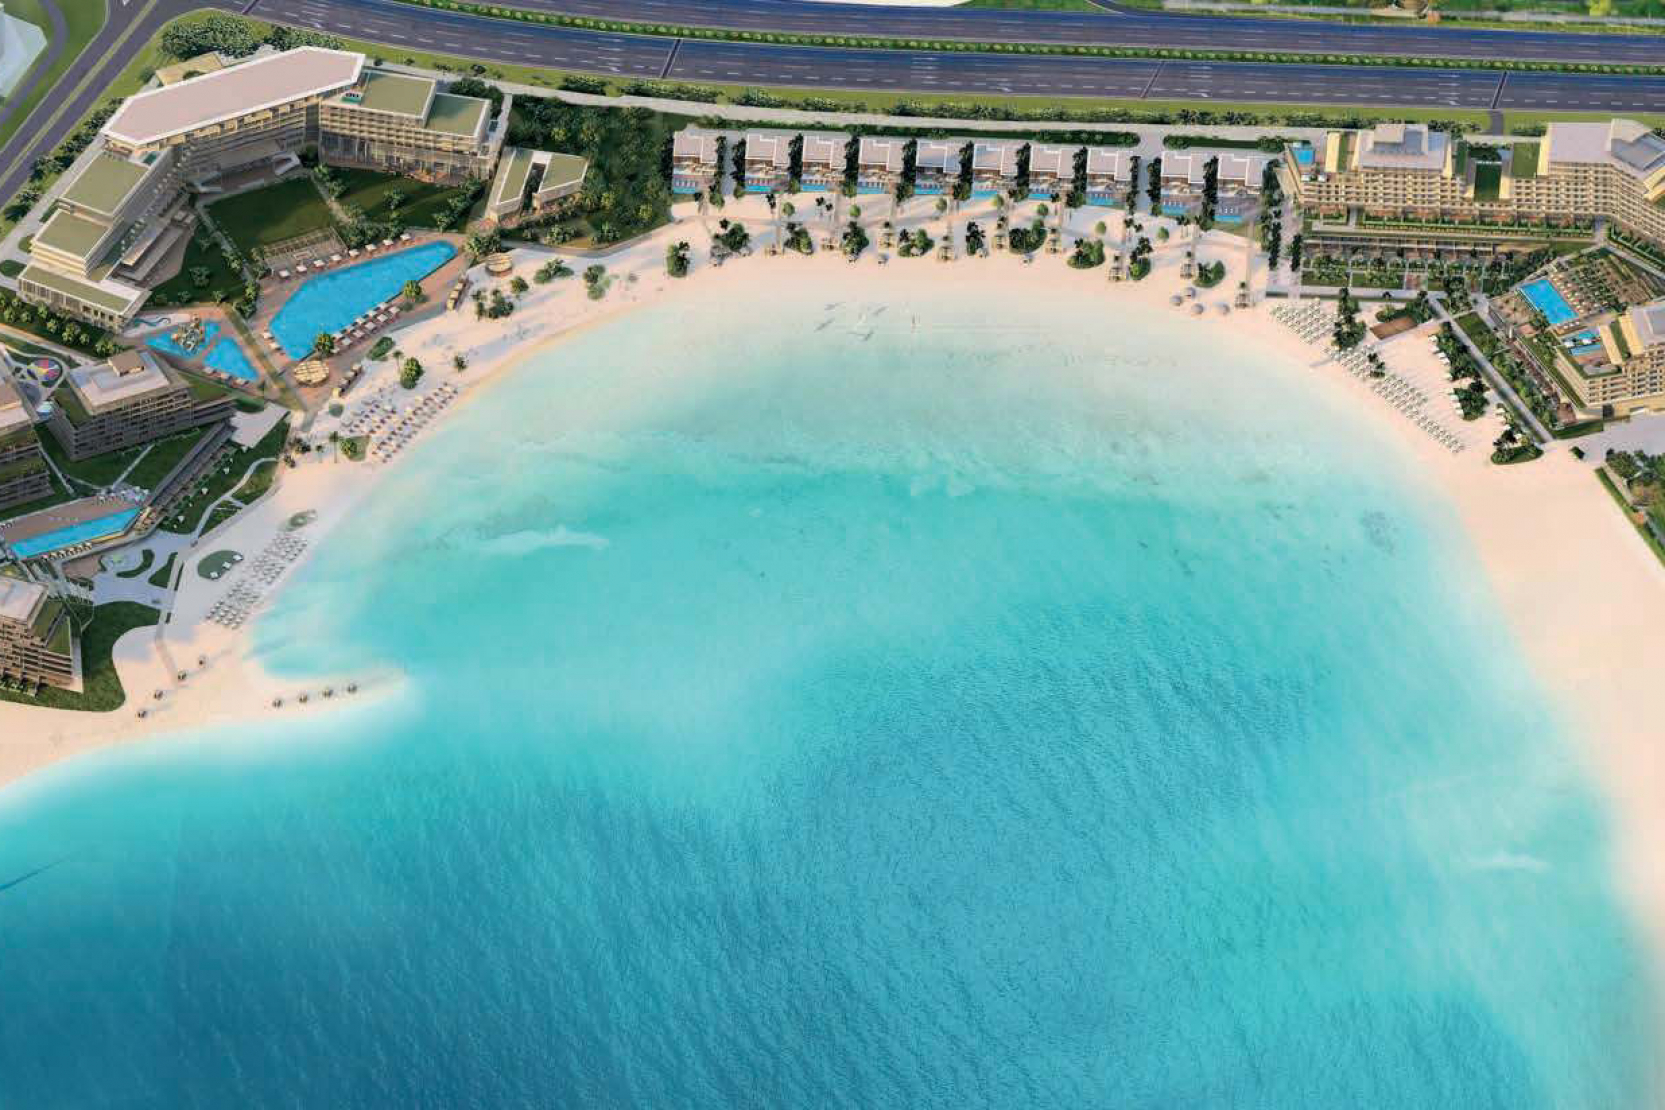 Rixos Phase 2 by Nakheel in Dubai Islands